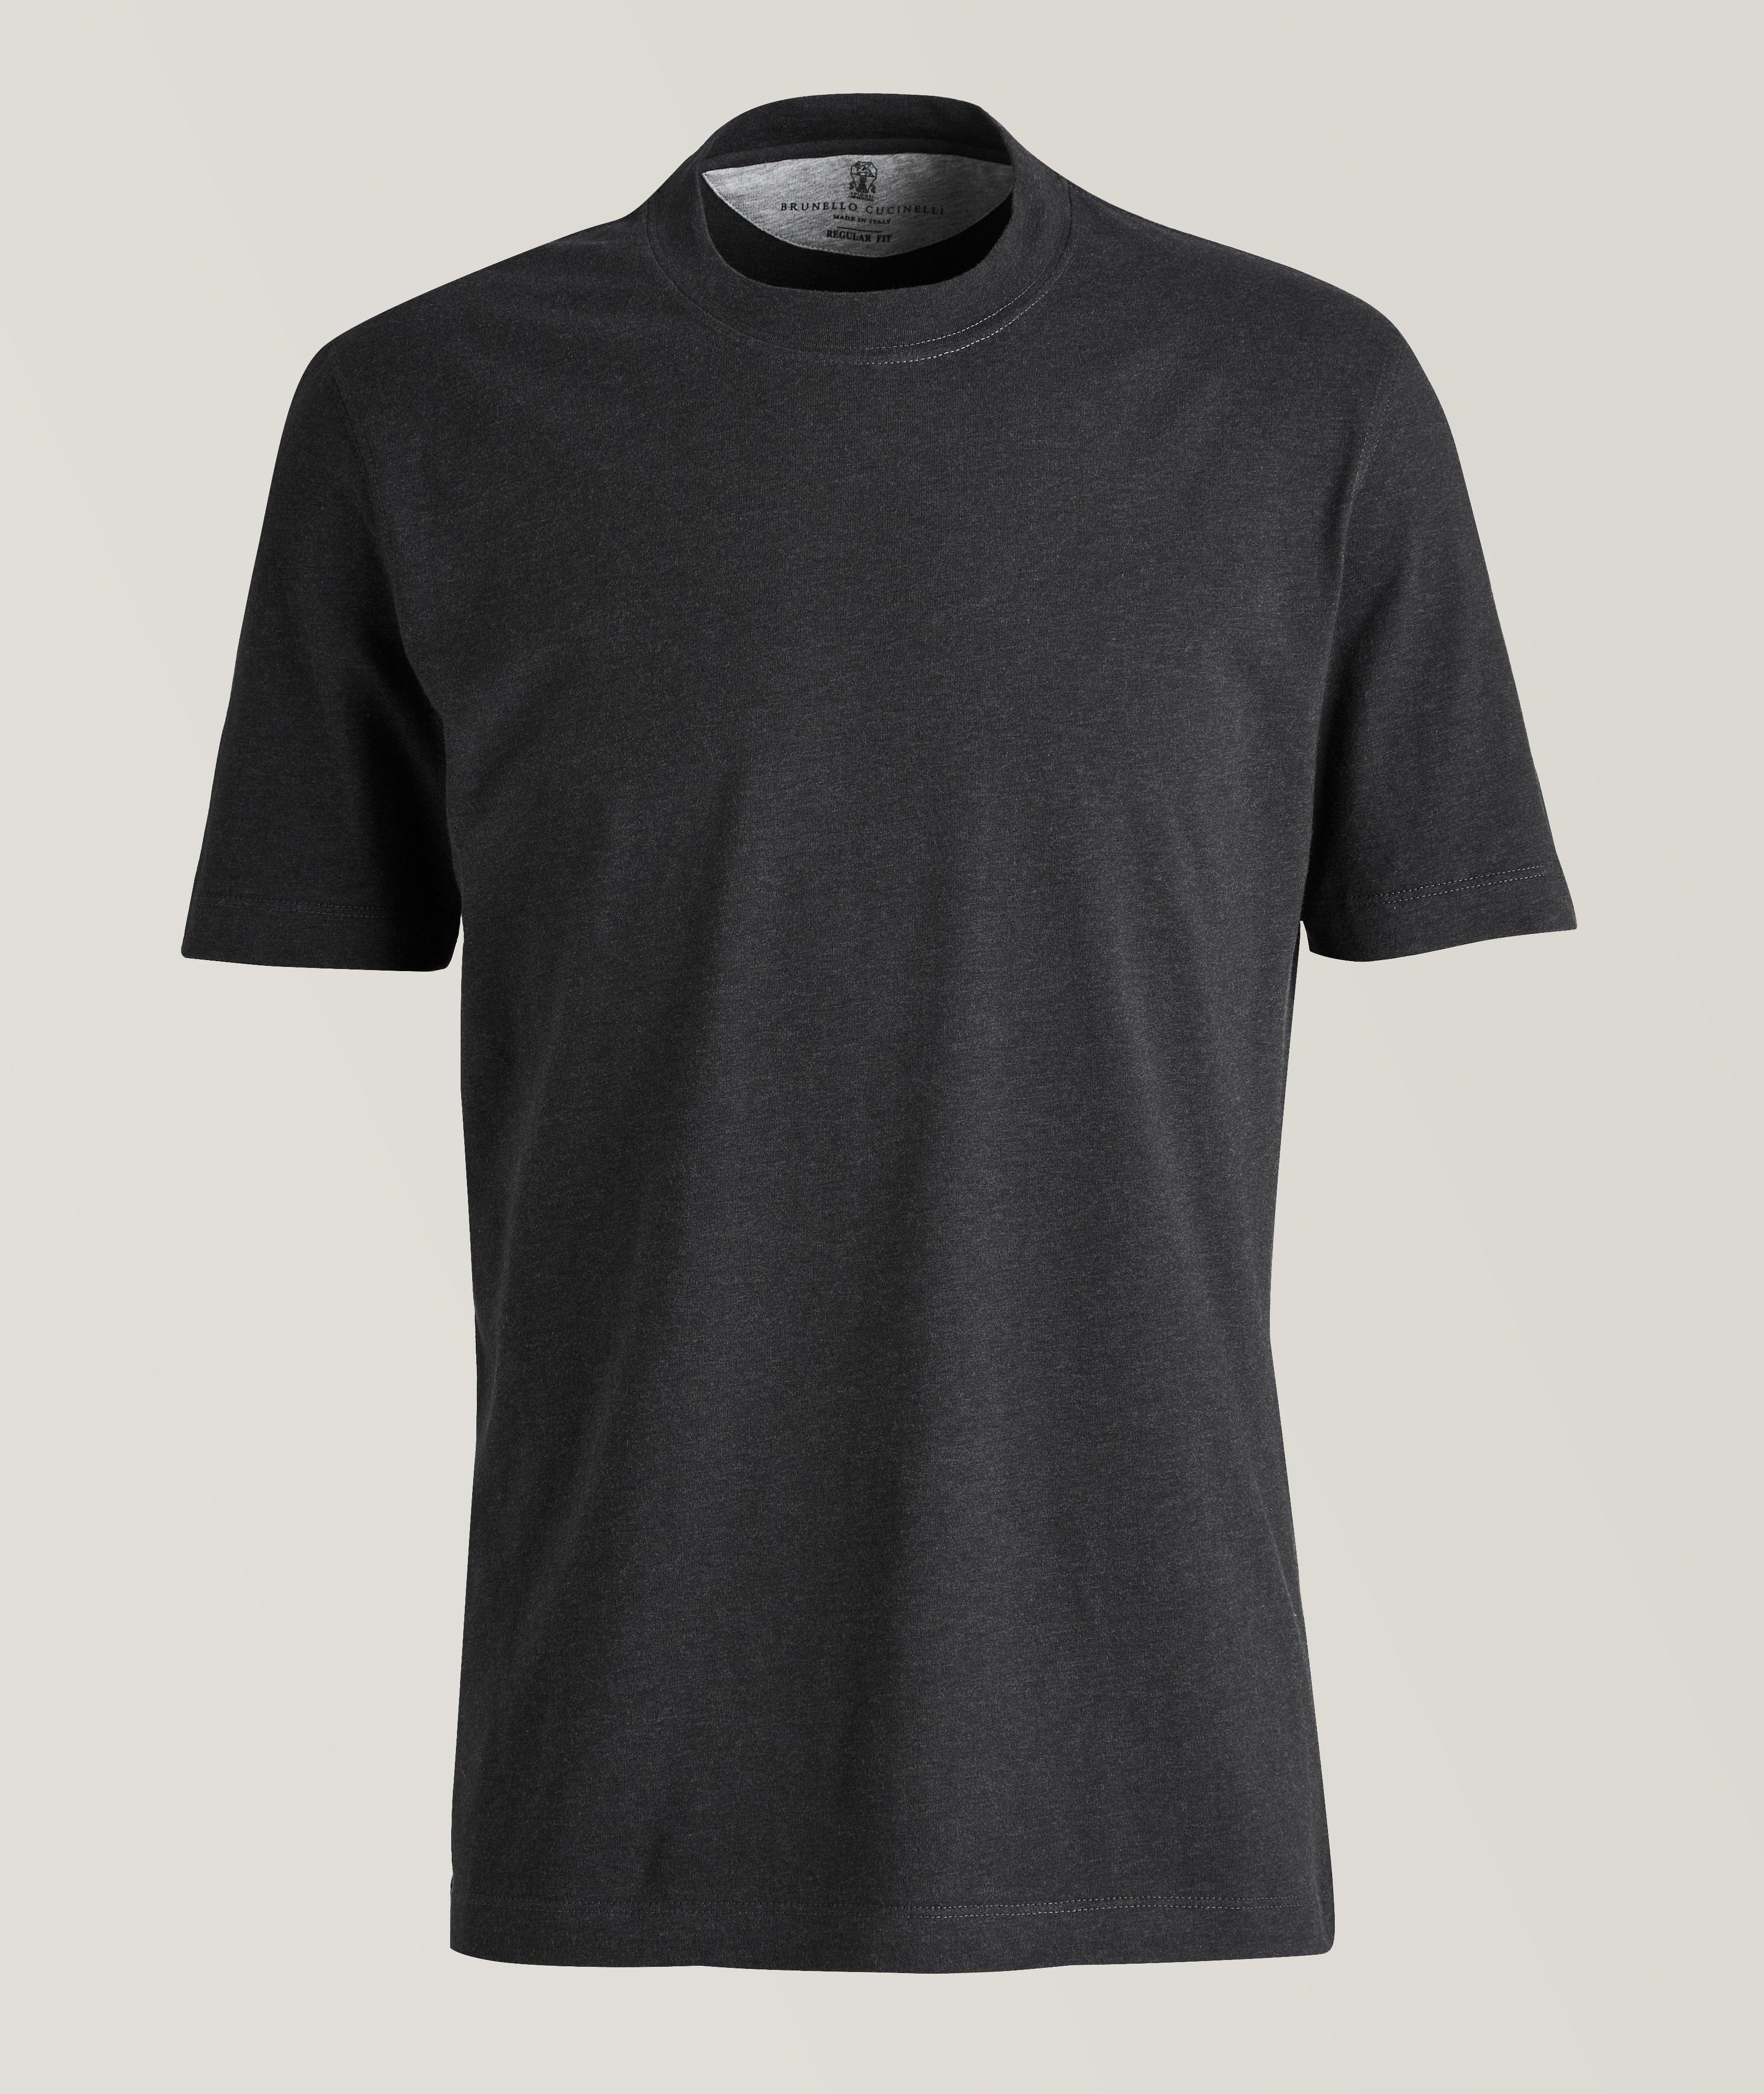 Short-Sleeve Cotton Crewneck T-Shirt image 0